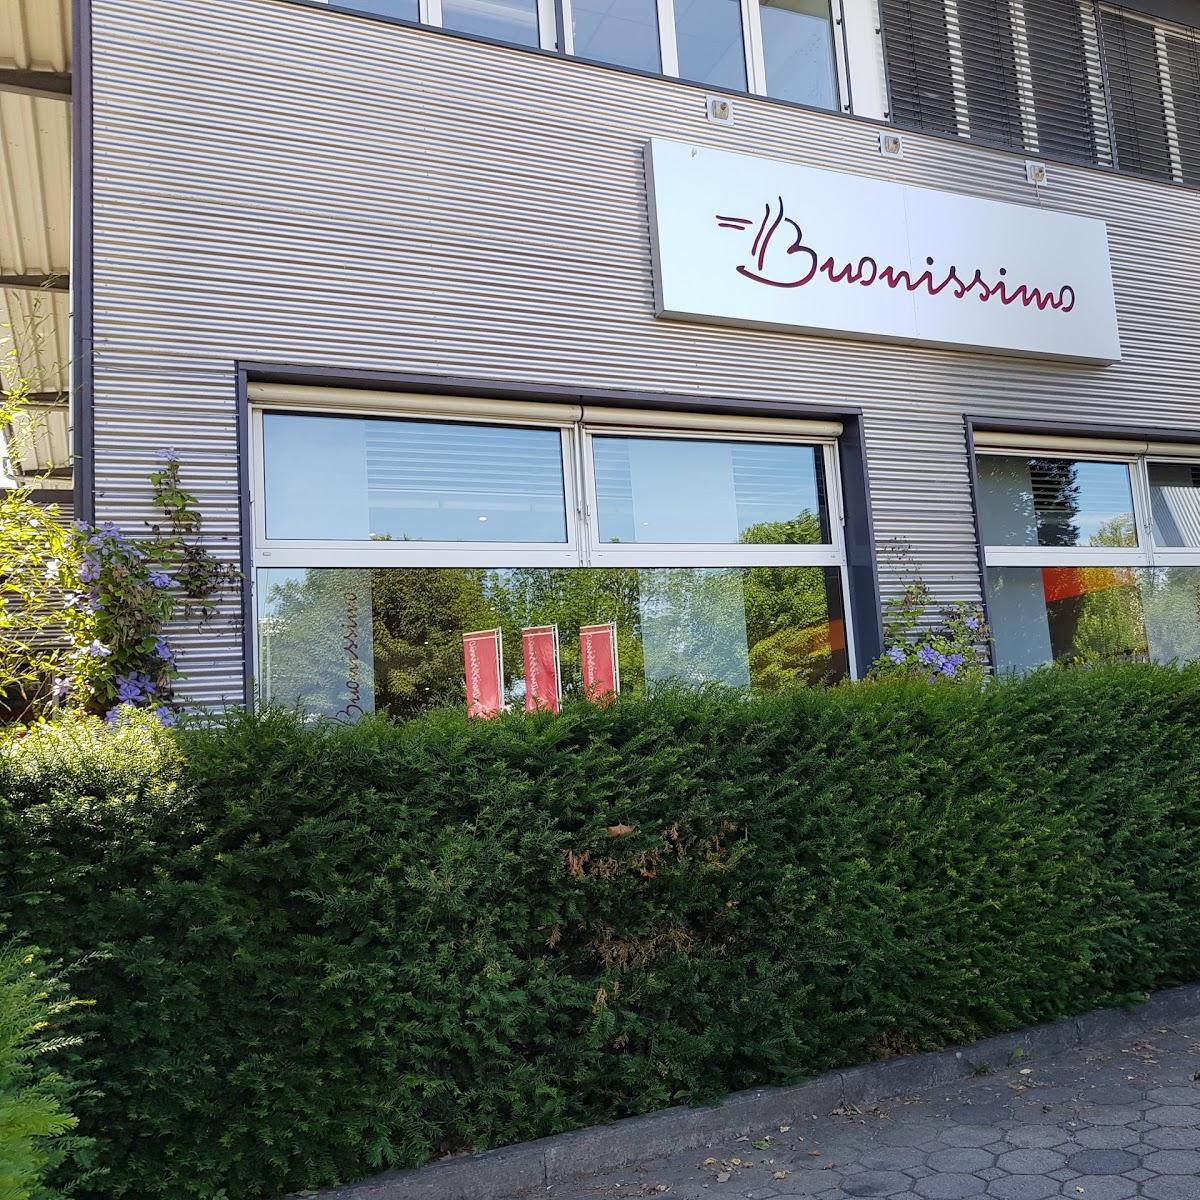 Restaurant "Buonissimo" in  Neu-Ulm